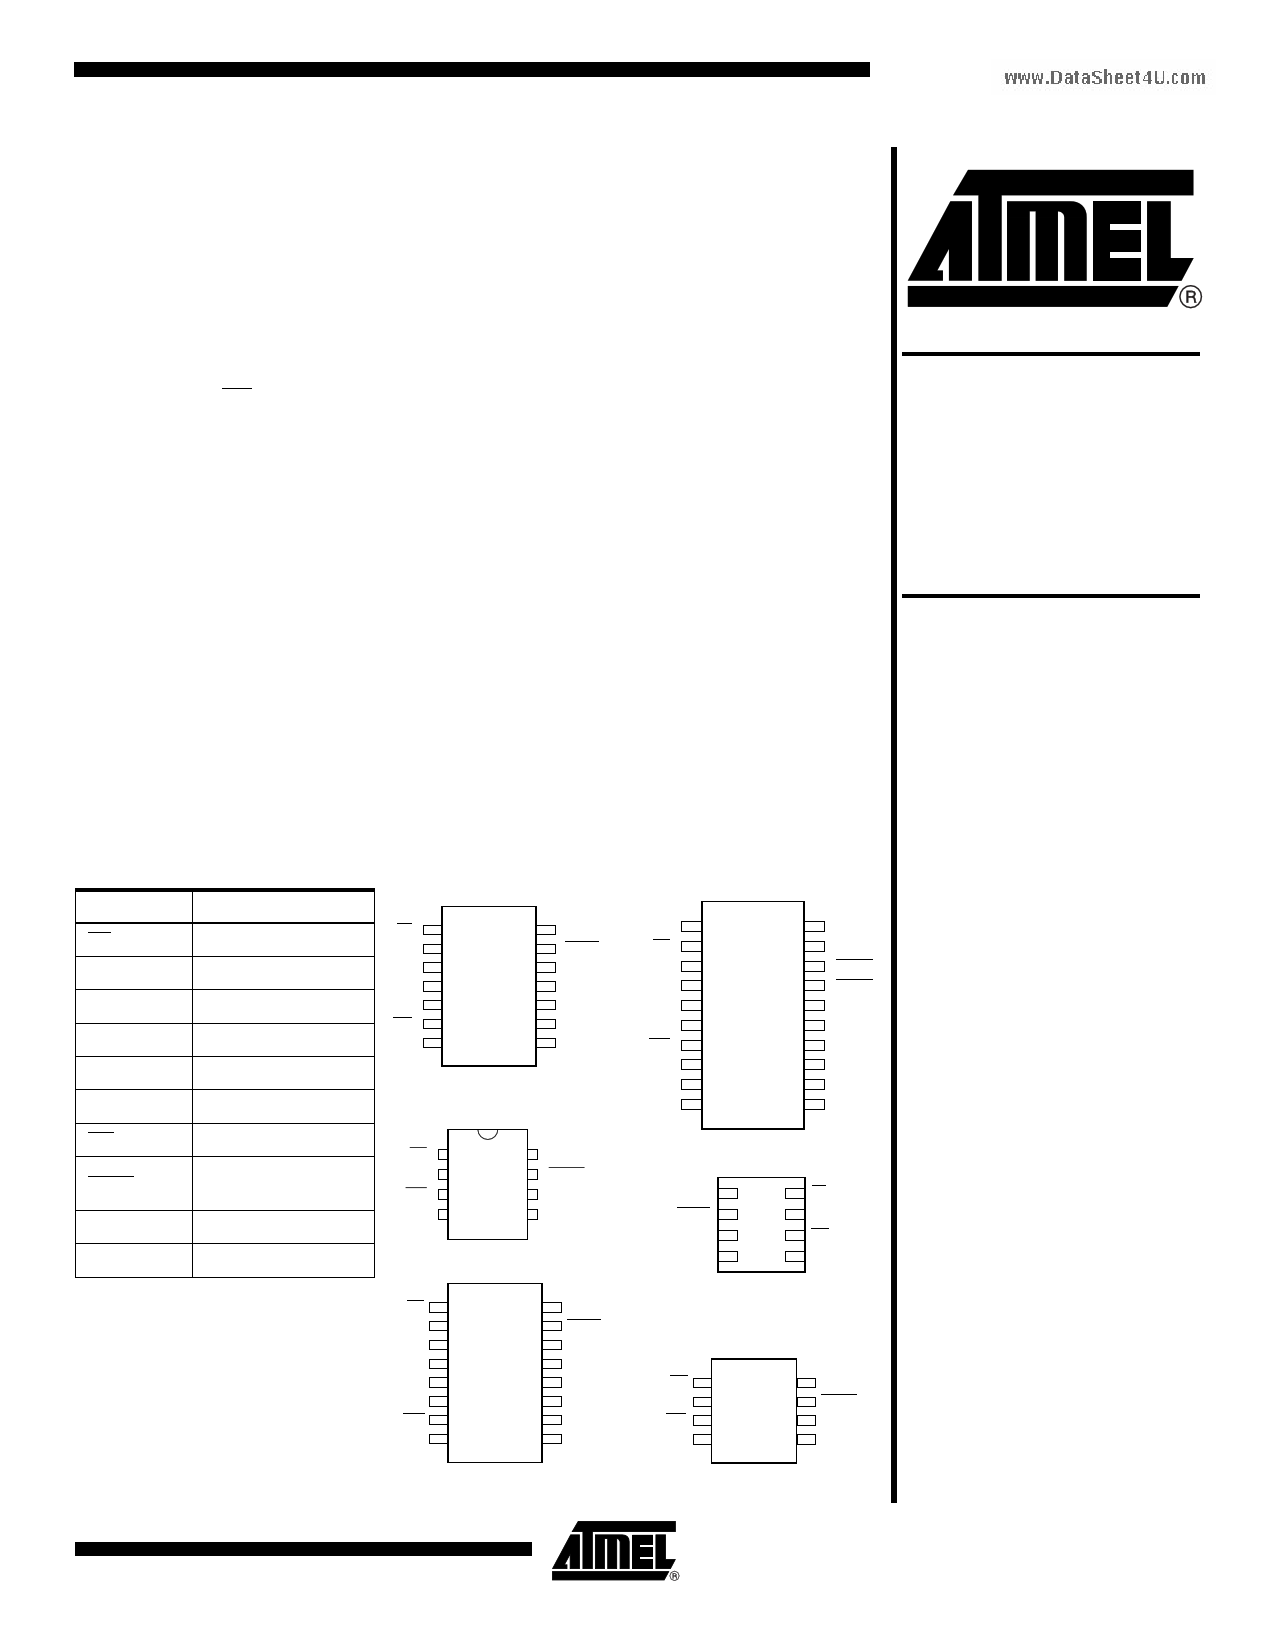 ATMEL25128 Datasheet, ATMEL25128 PDF,ピン配置, 機能